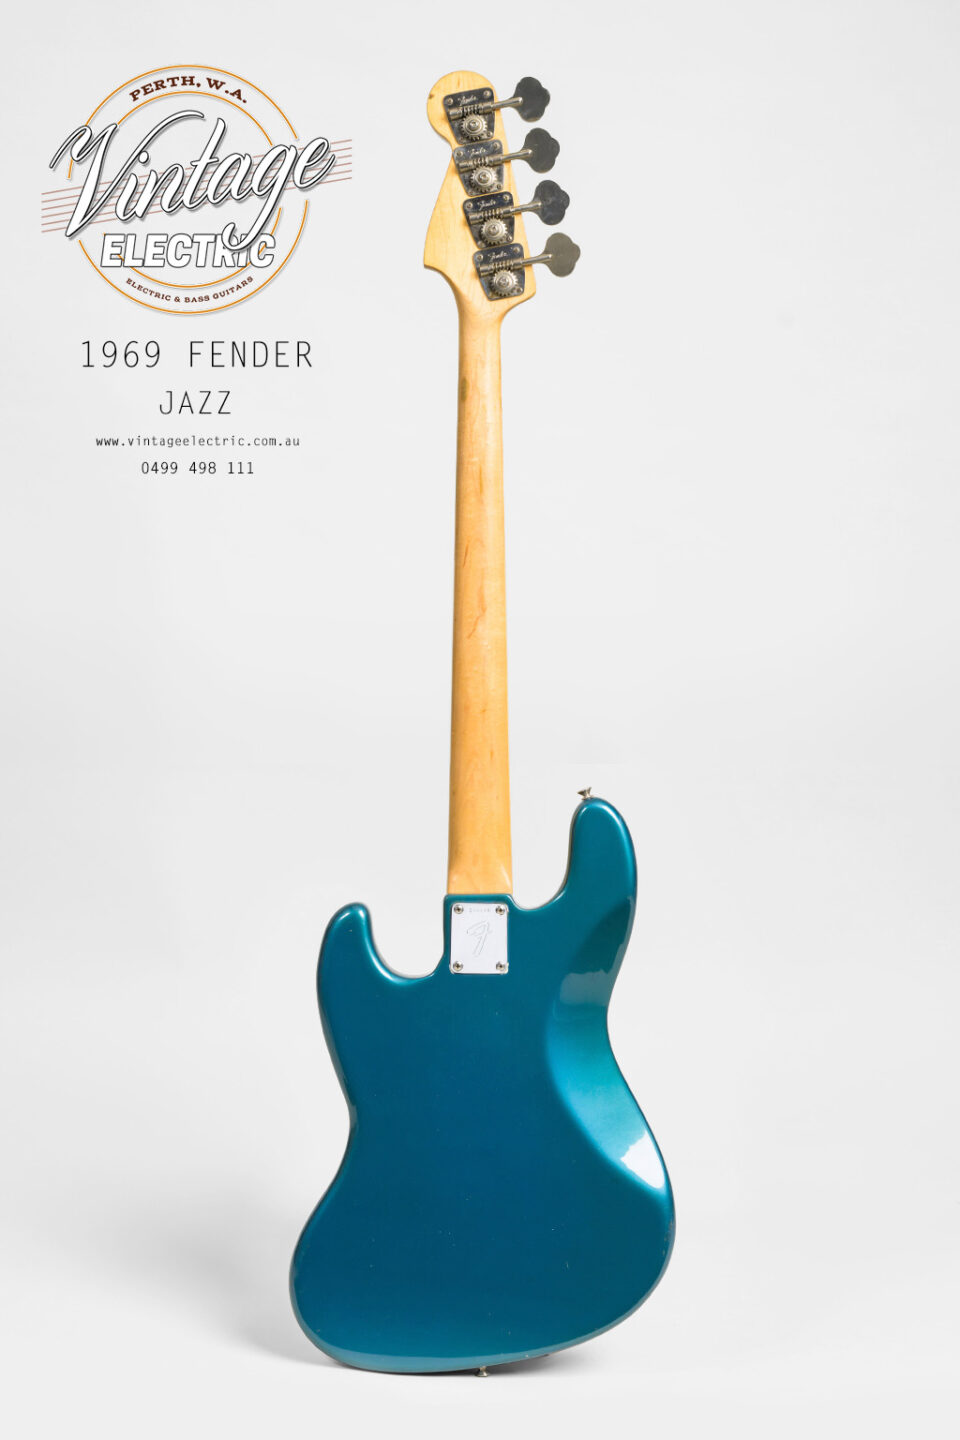 1969 Fender Jazz Back of Bass